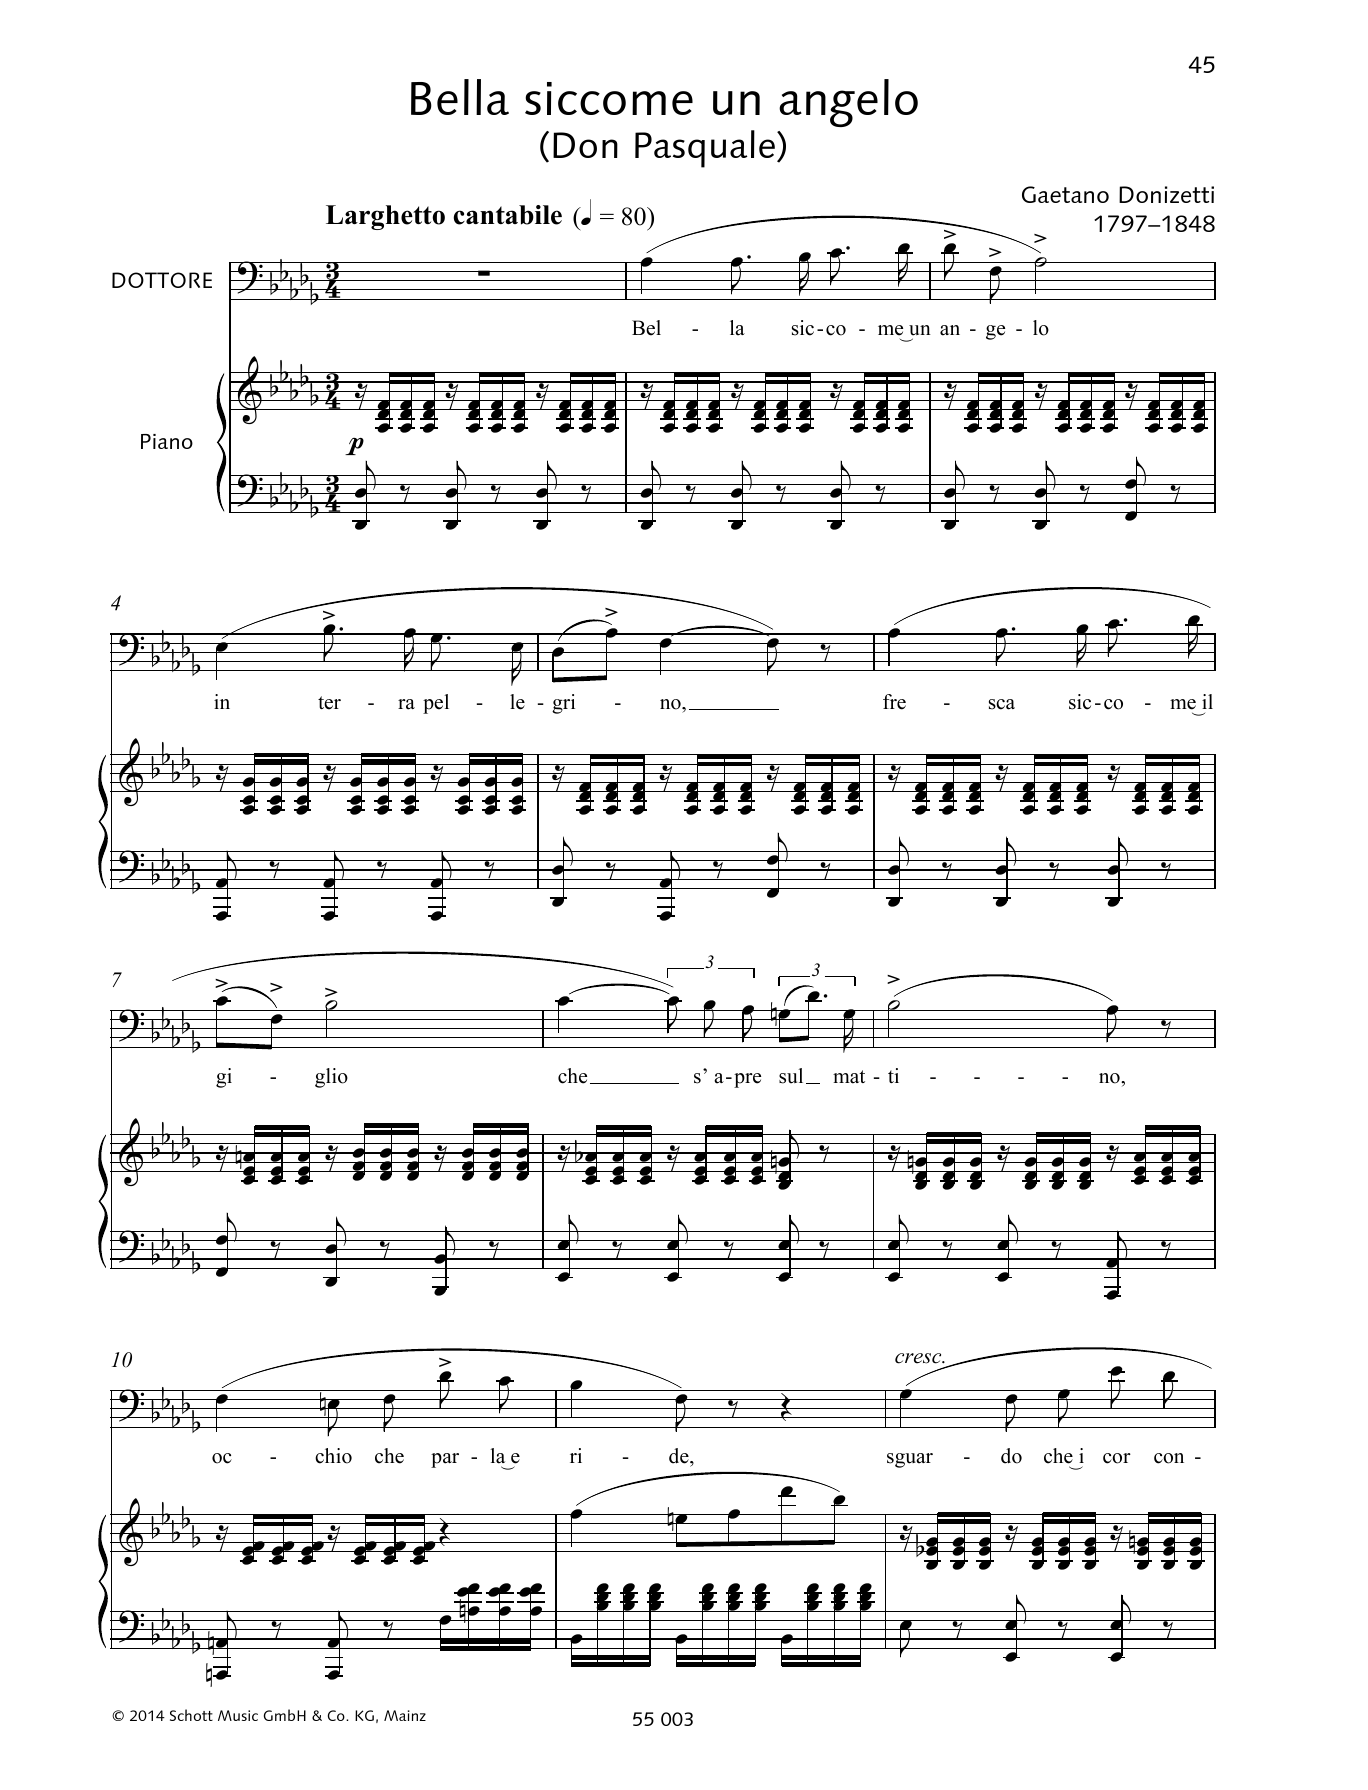 Francesca Licciarda Bella siccome un angelo Sheet Music Notes & Chords for Piano & Vocal - Download or Print PDF